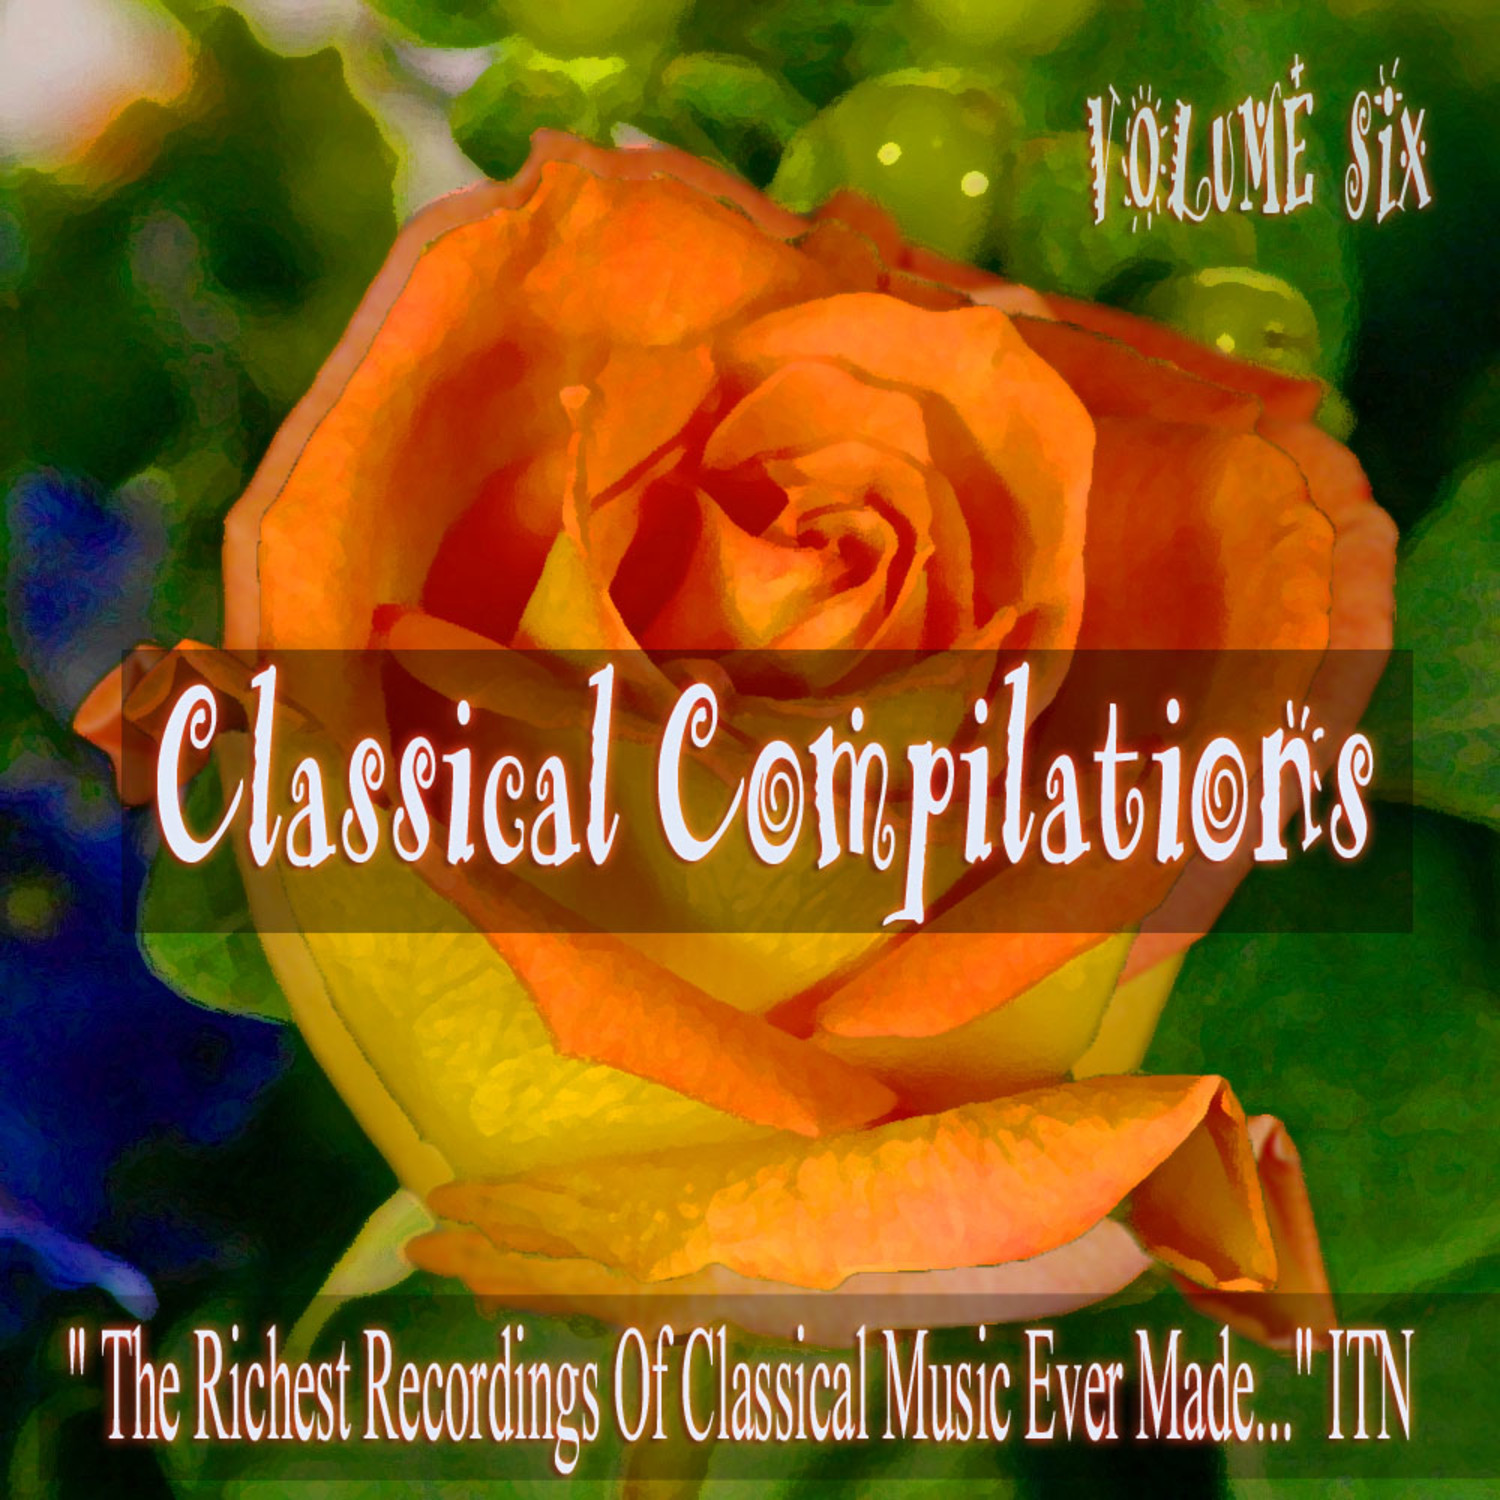 Classical Compilations Volume Six